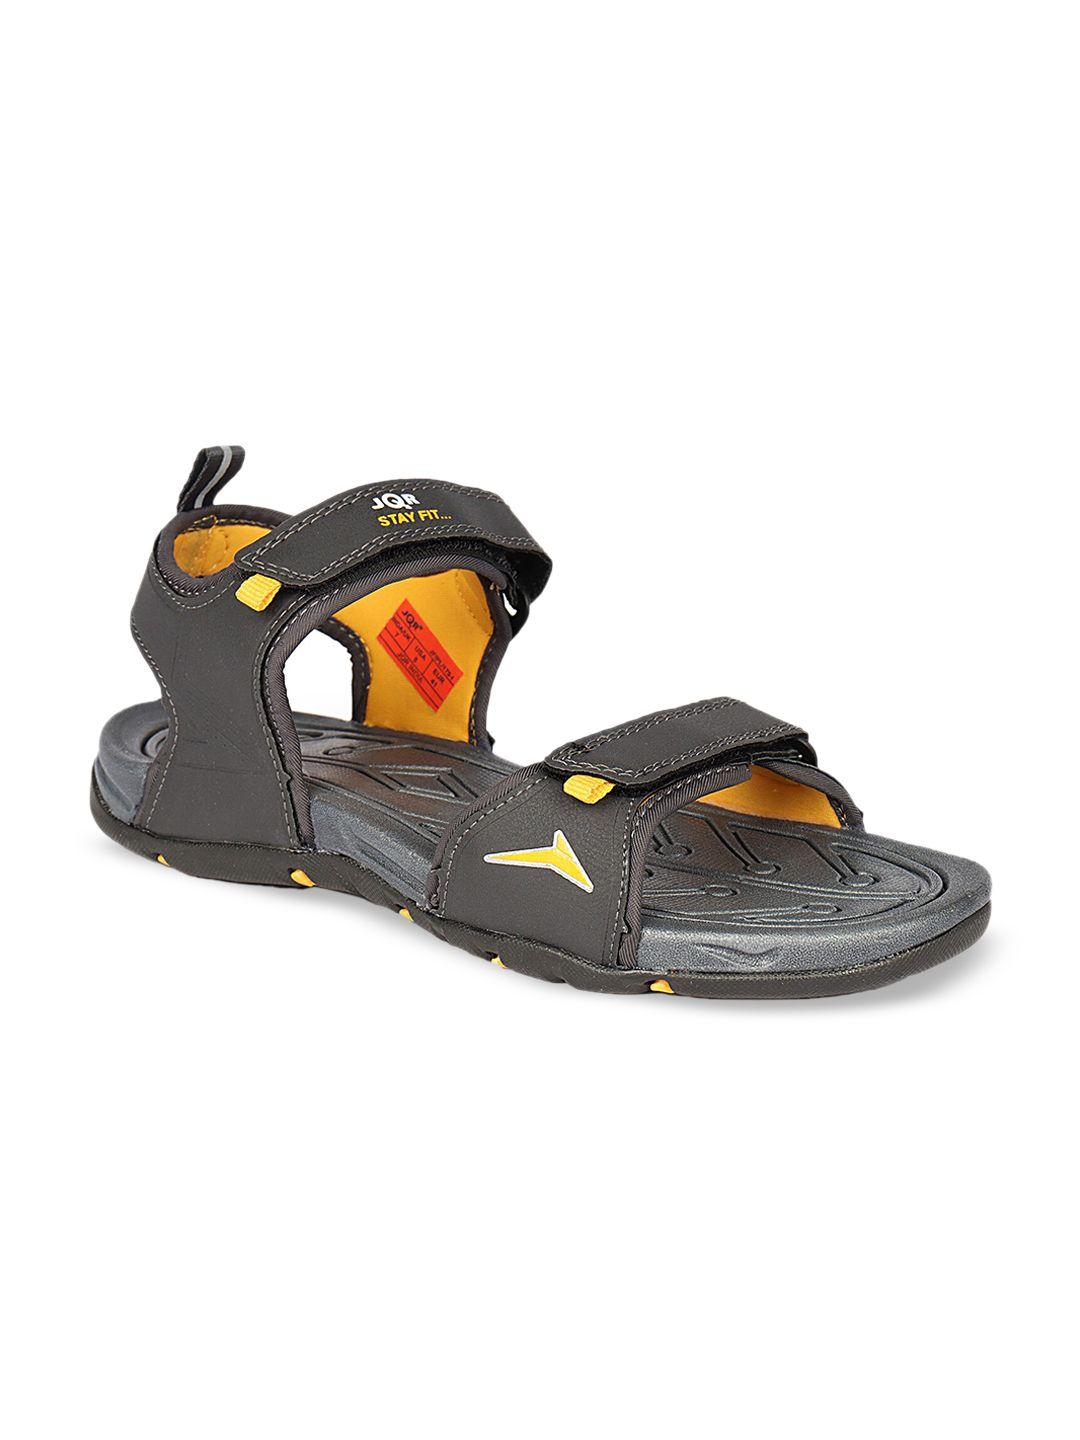 jqr-men-patterned-sports-sandals